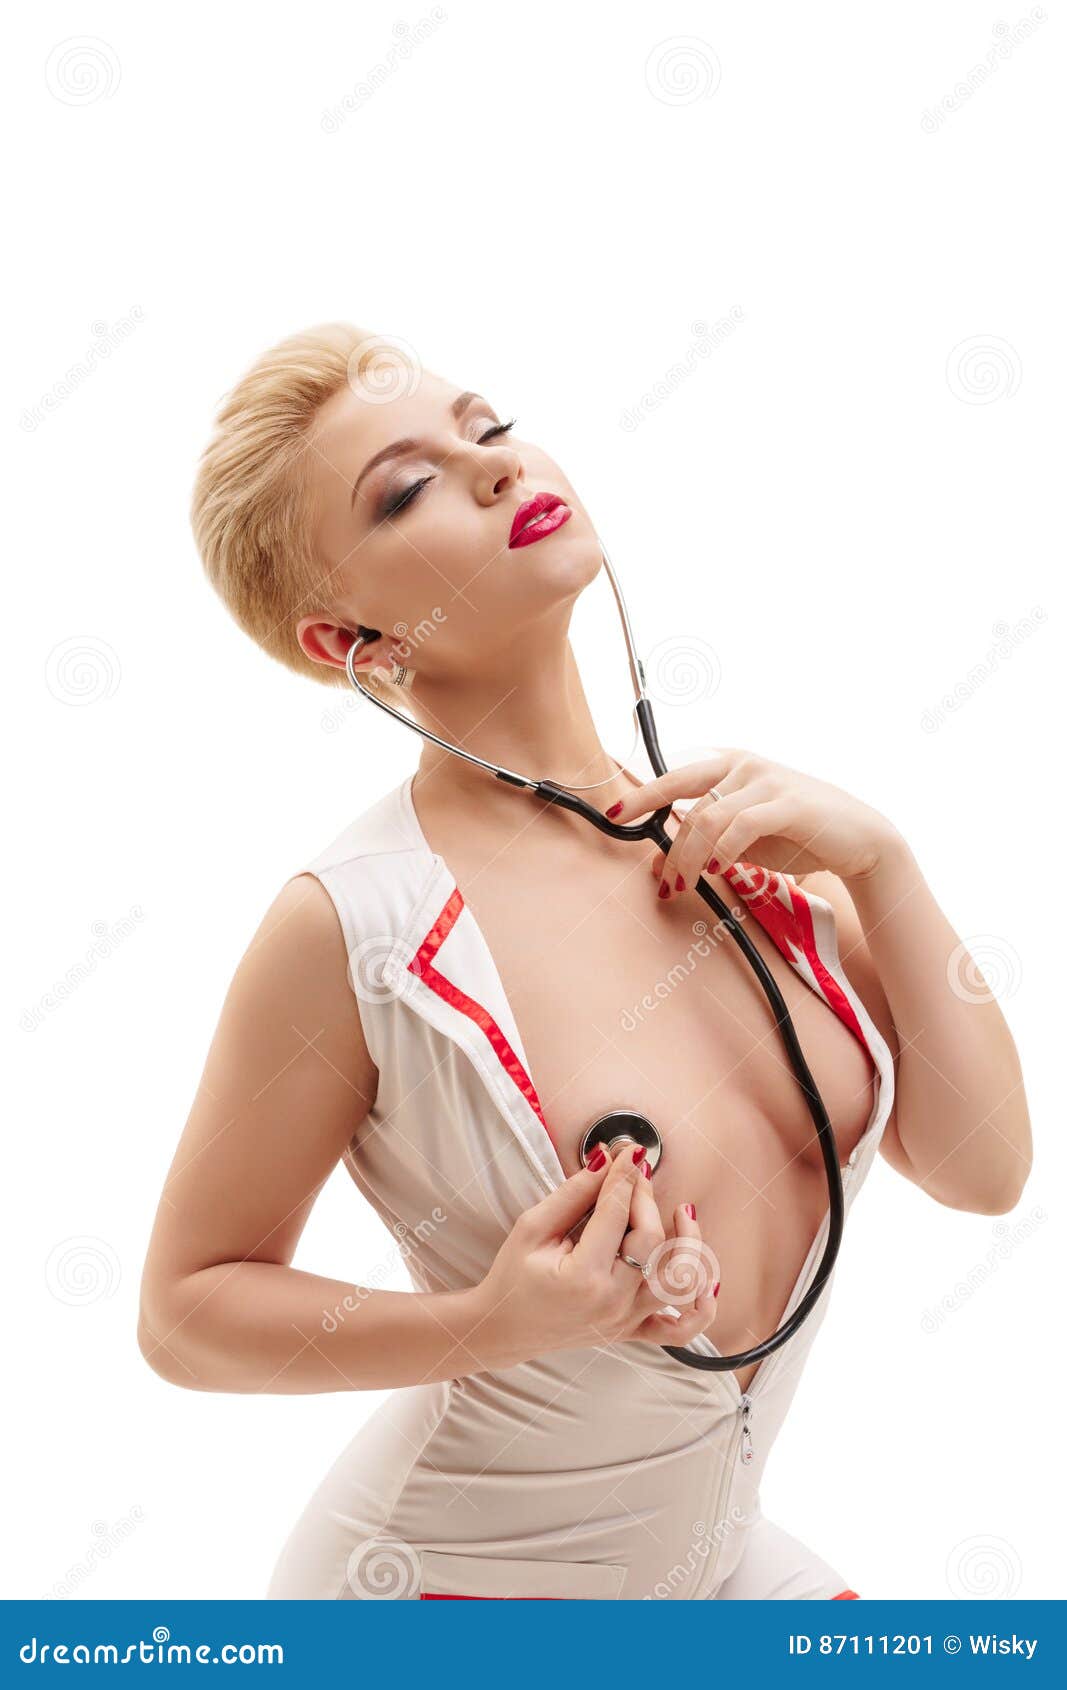 Pretty Blonde Nurse Topless in Uniform Stock Image - Image of